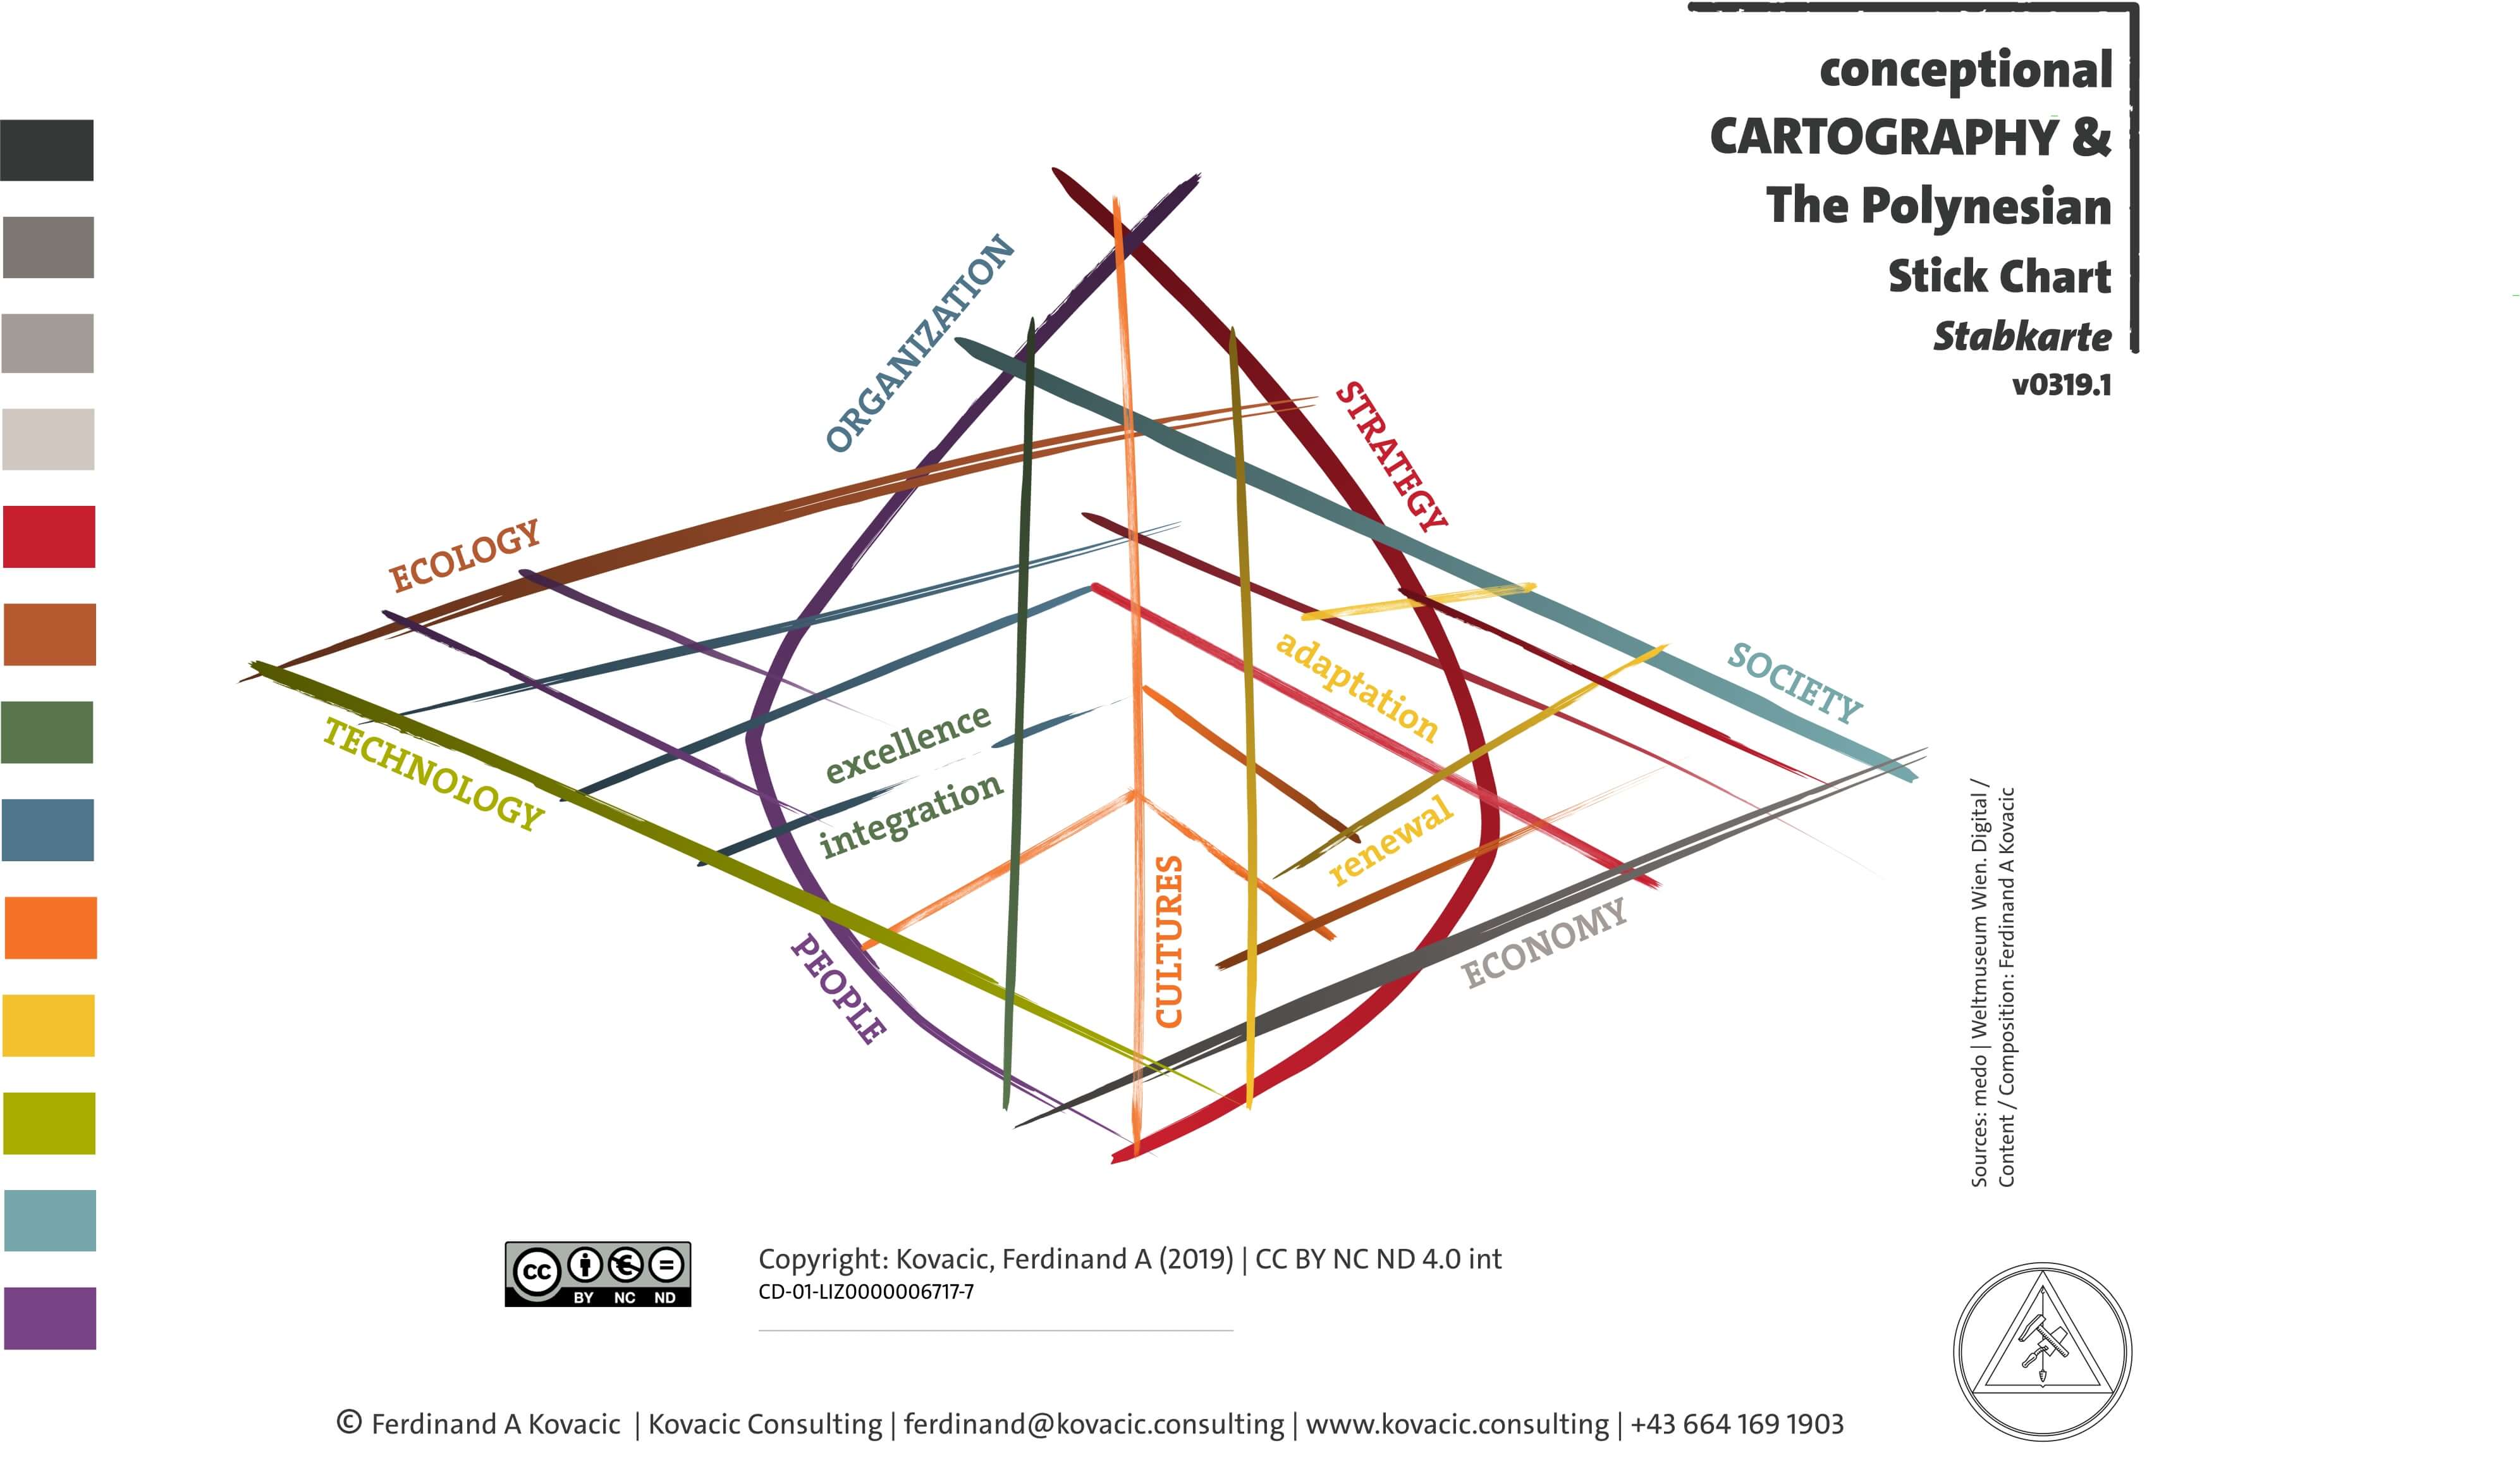 Conceptional cartography. The Polynesian Stick Chart. Stabkarte